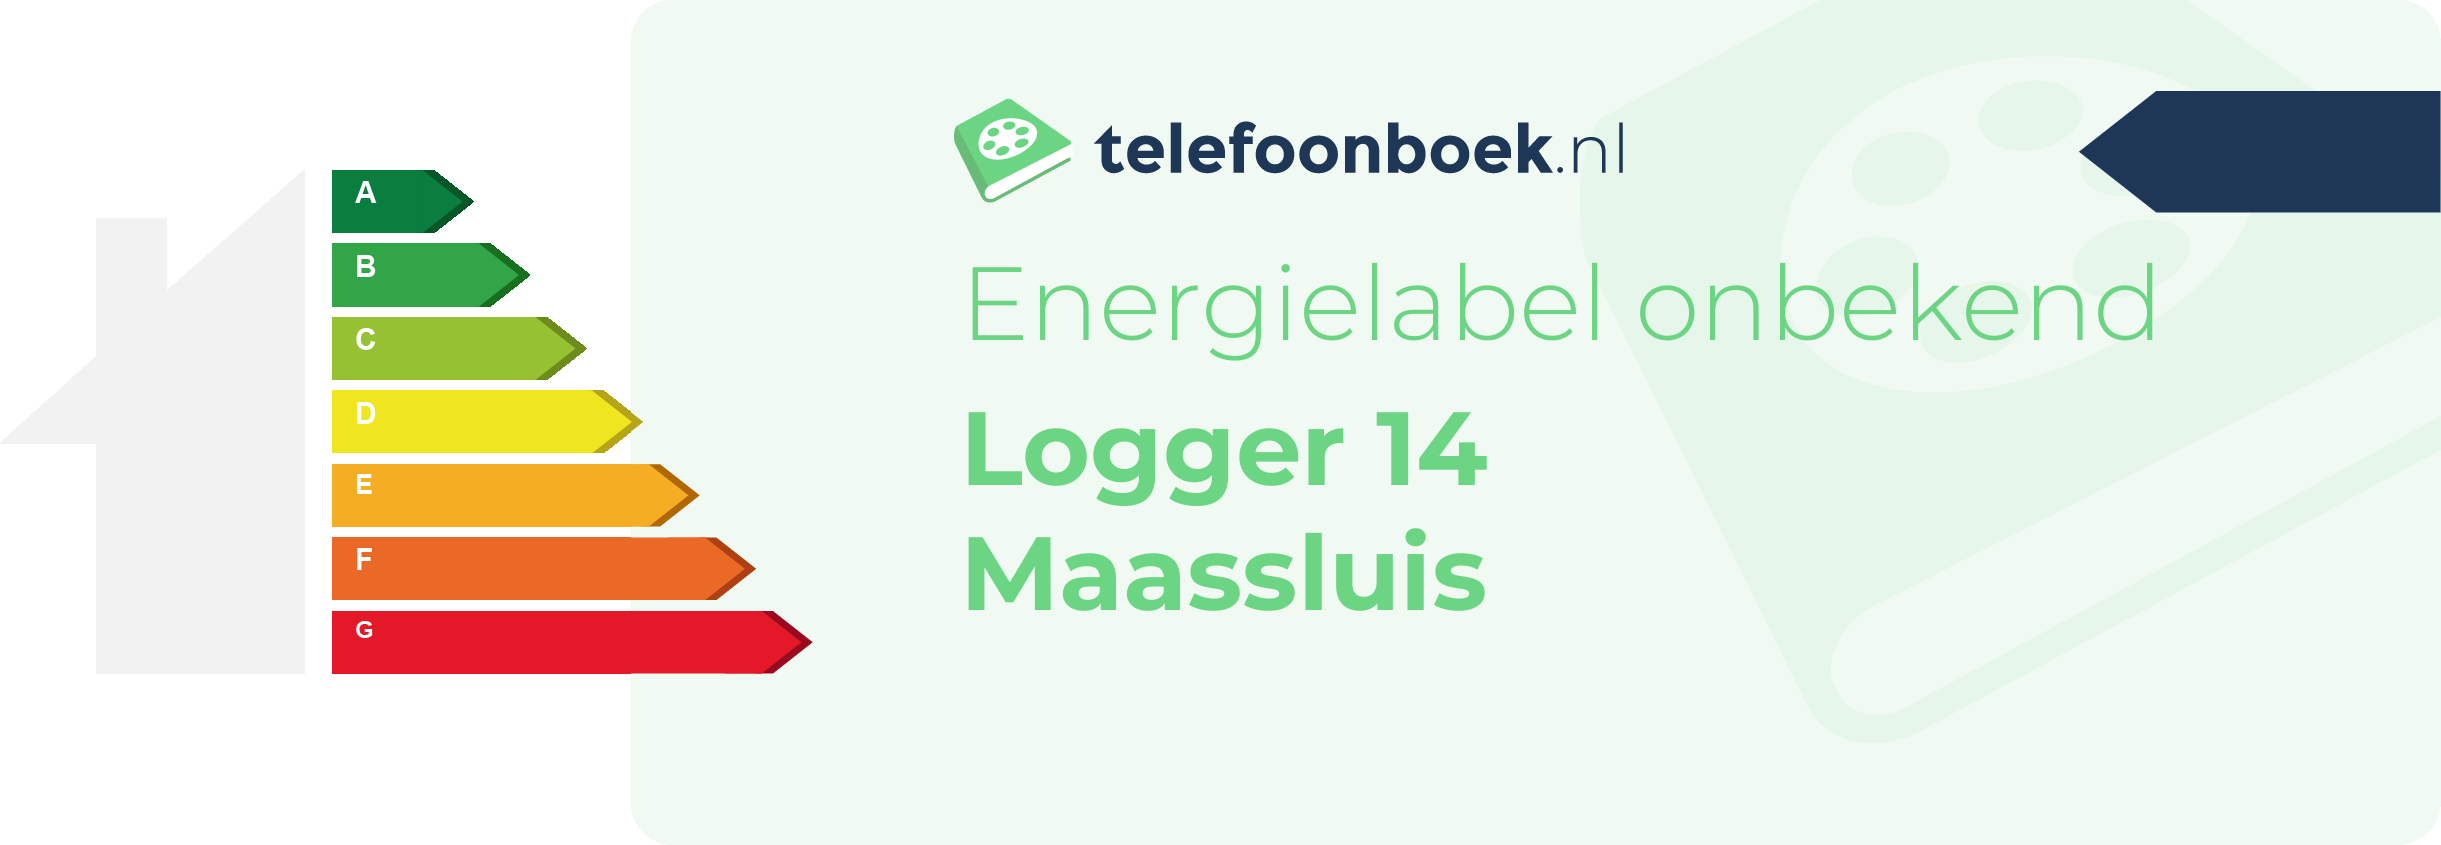 Energielabel Logger 14 Maassluis